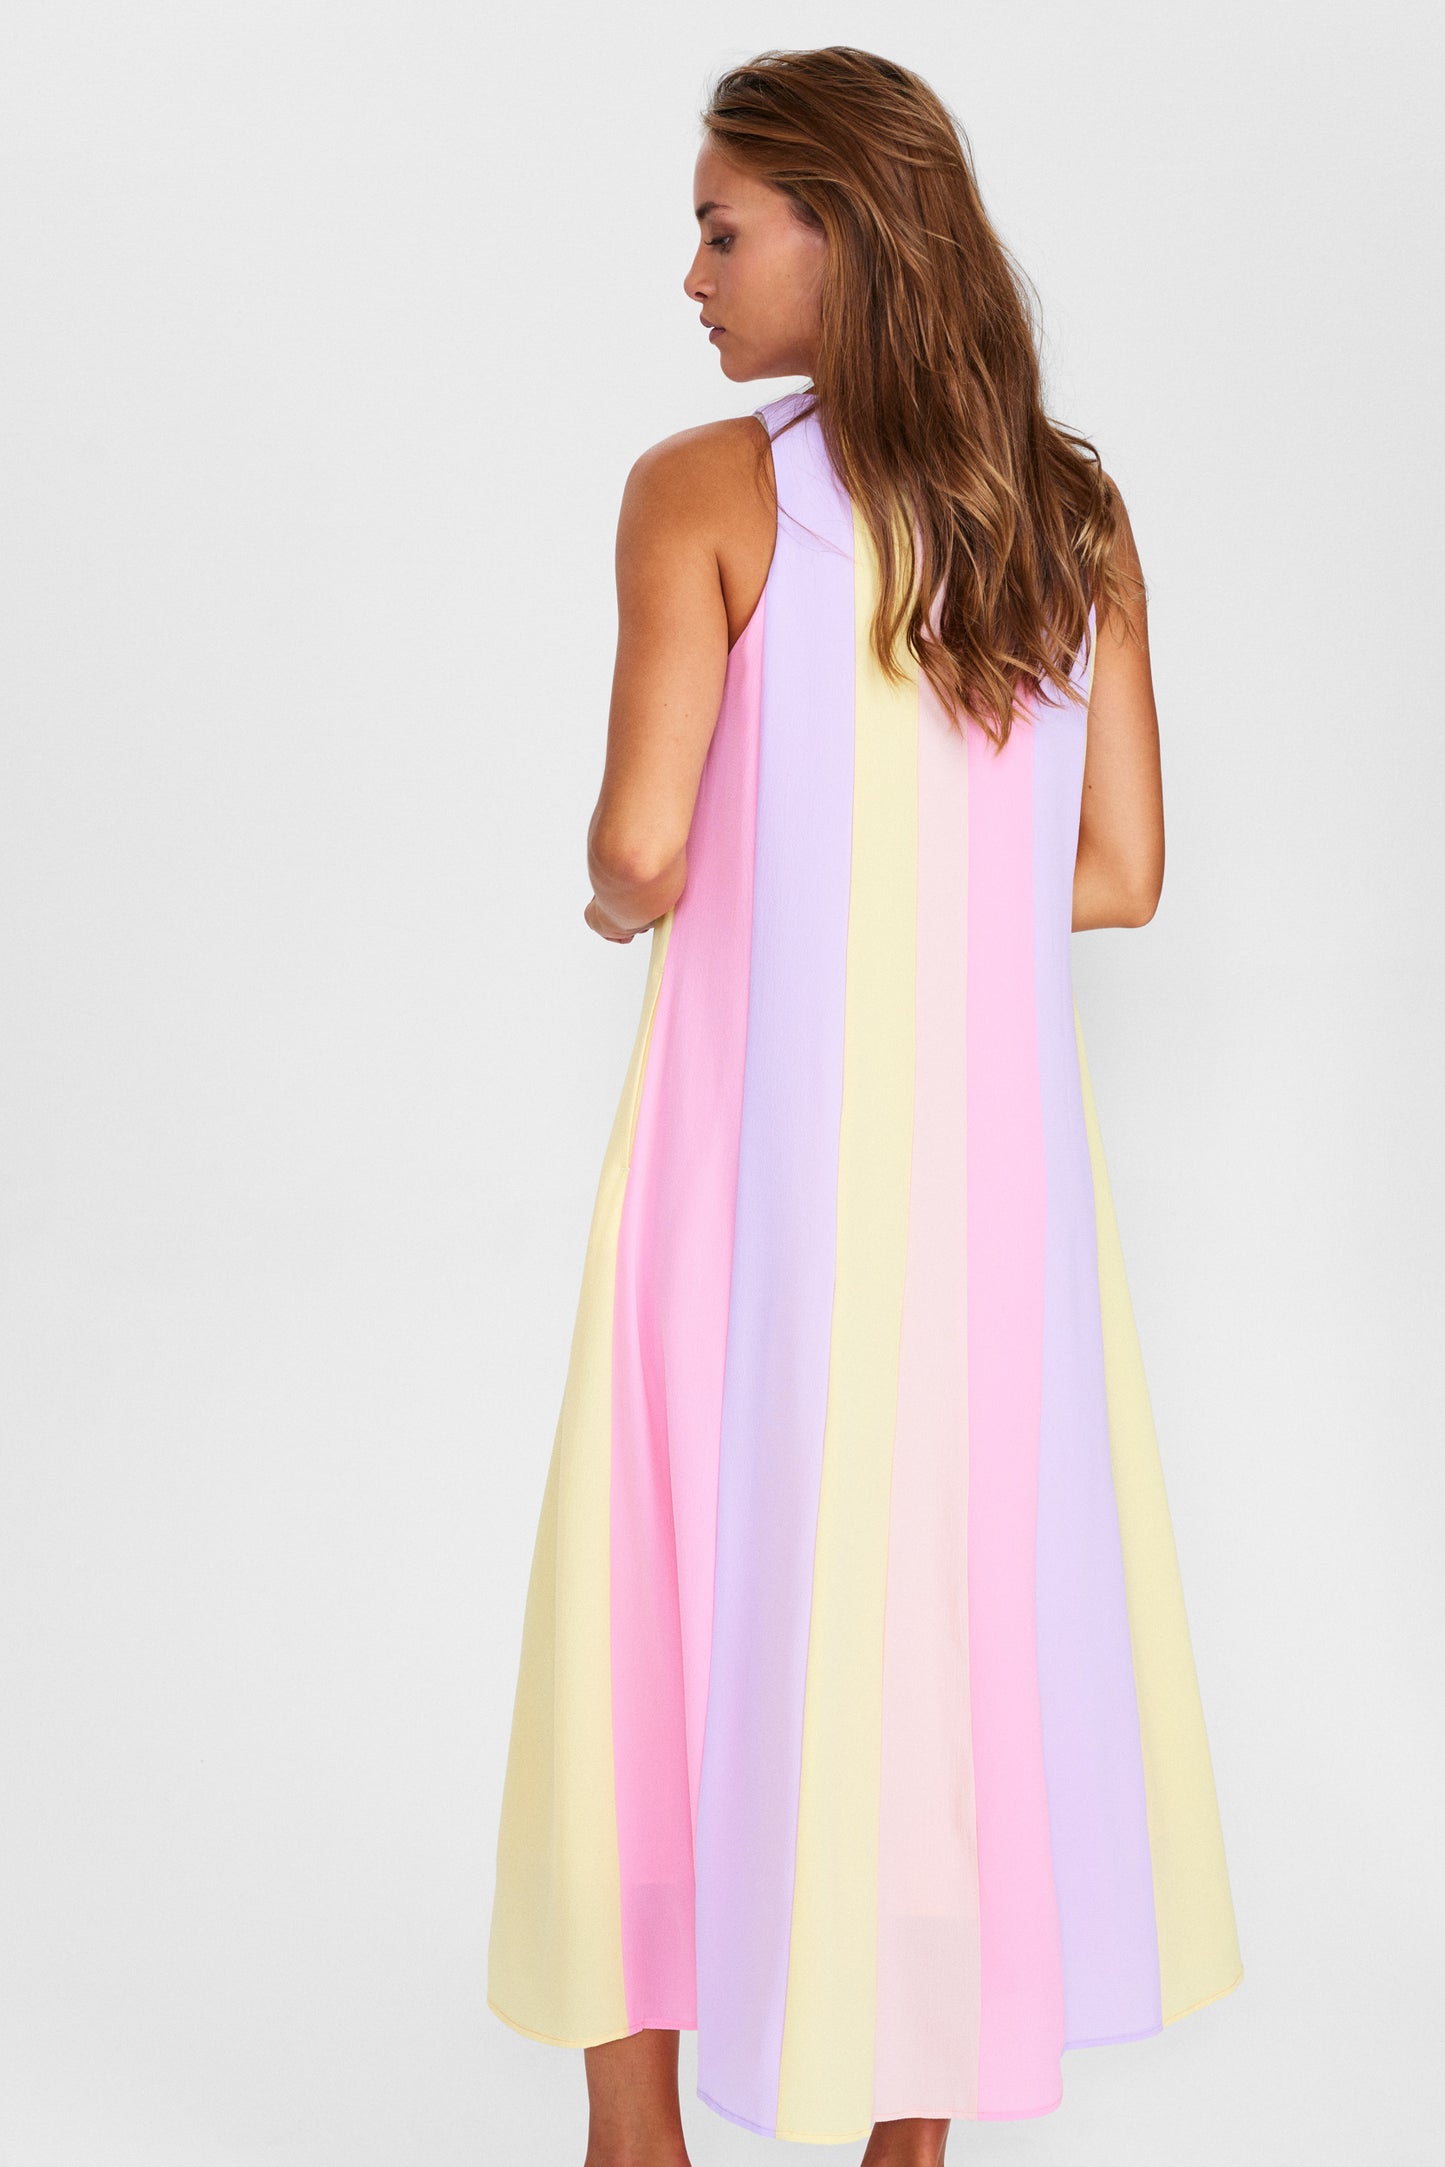 Numph penelope dress - pastel mix